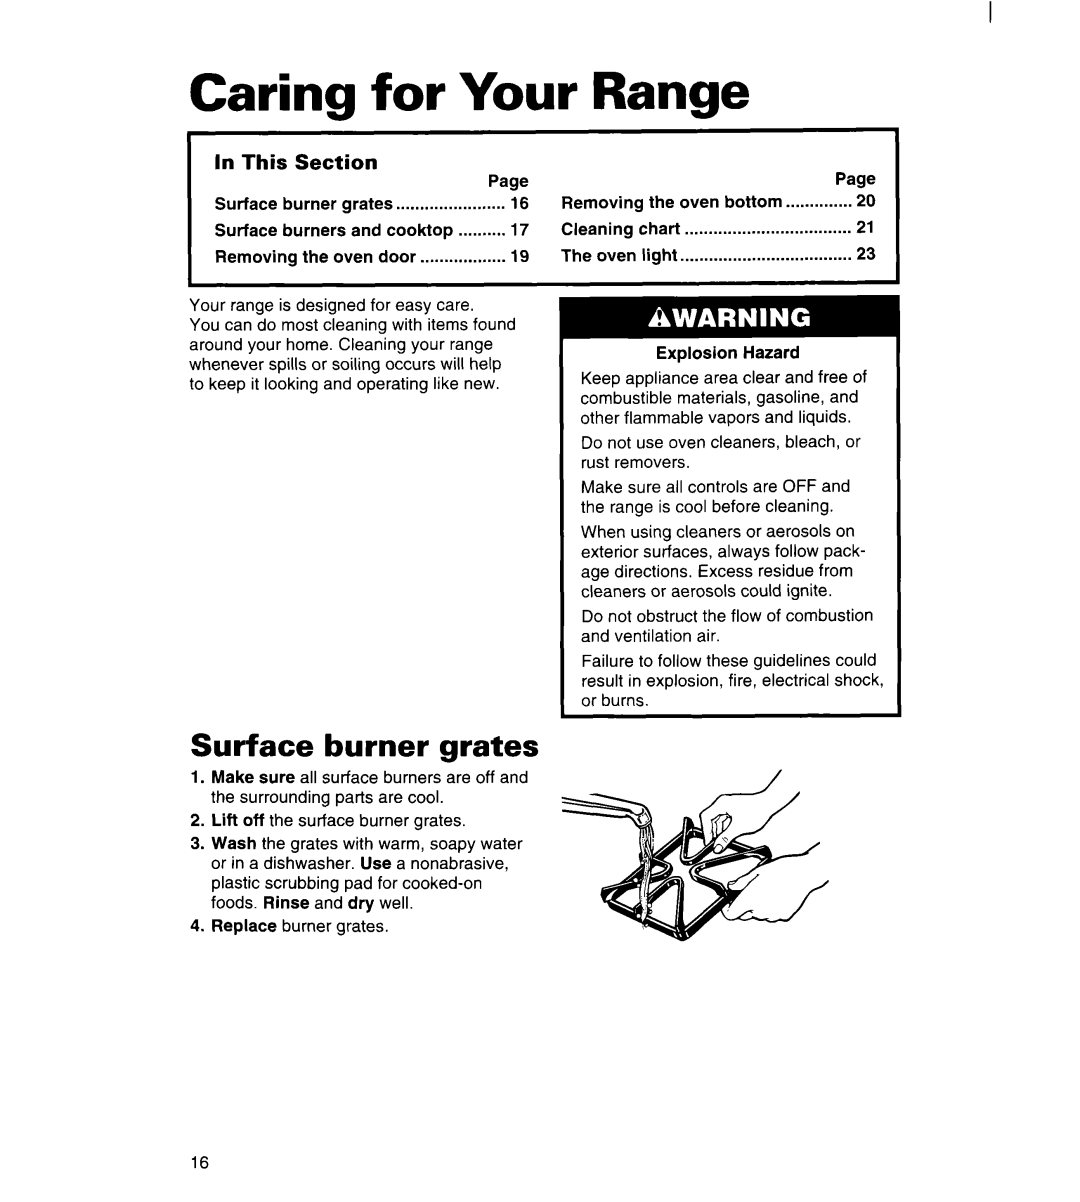 Estate TGRGIWZB manual Caring for Your Range, Surface burner arates 